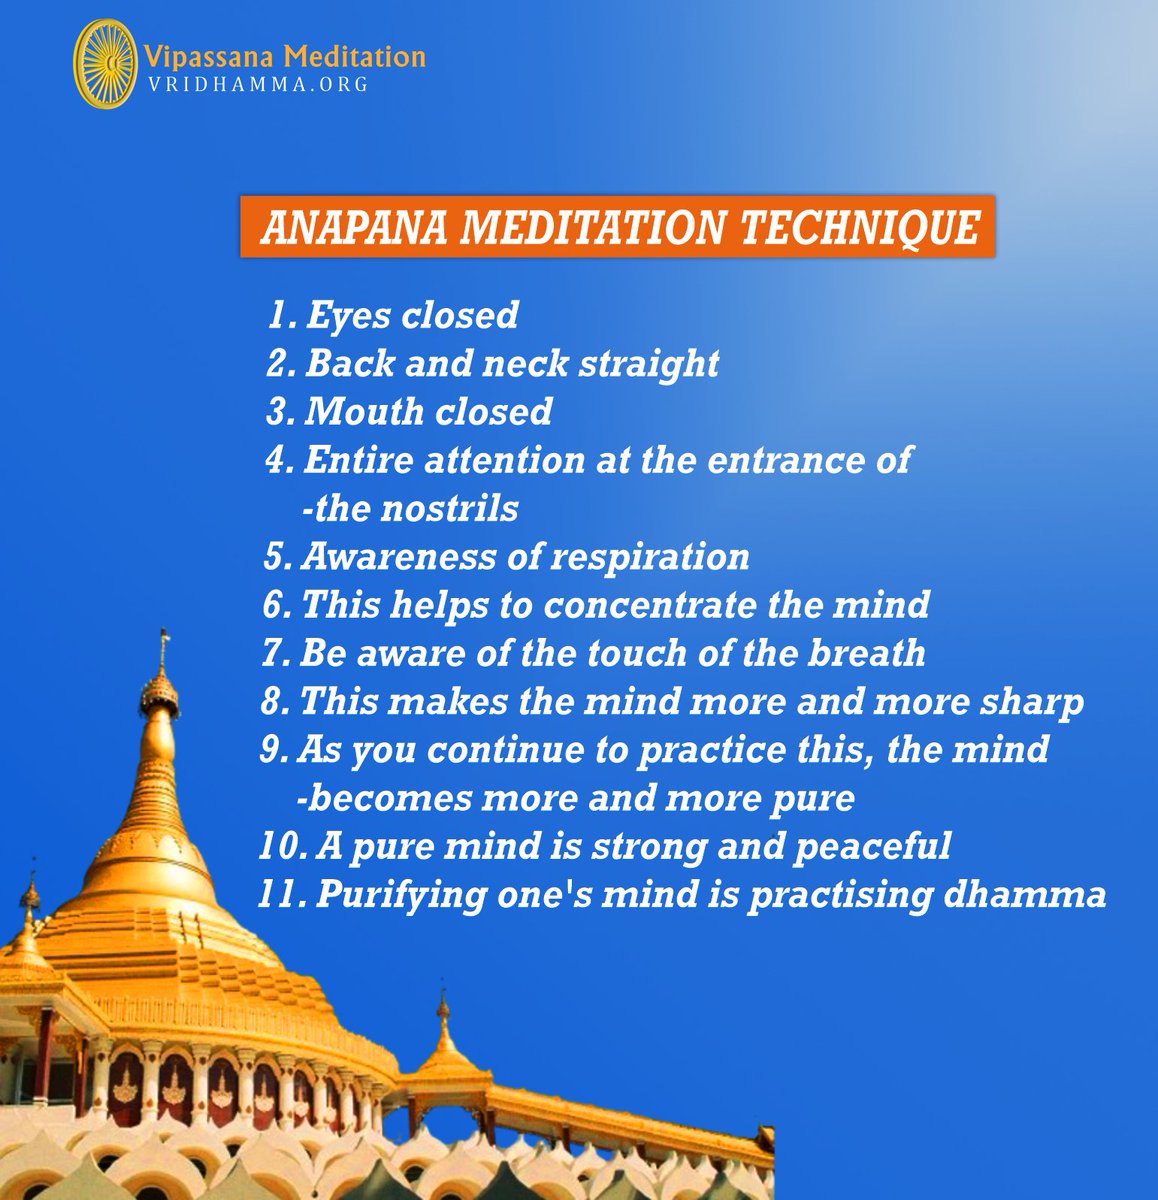 vridhamma.org/mini-anapana

#Buddha #Dhamma #Sangha #Vipassana #Meditation #SayagyiUBaKhin #SNGoenka #centenaryyear #buddhateachings #enlightenment #peace #meditatedaily #mettabhavana #mindfulness #spirituality #compassion #lovingkindness #meditate #meditationpractice #metta